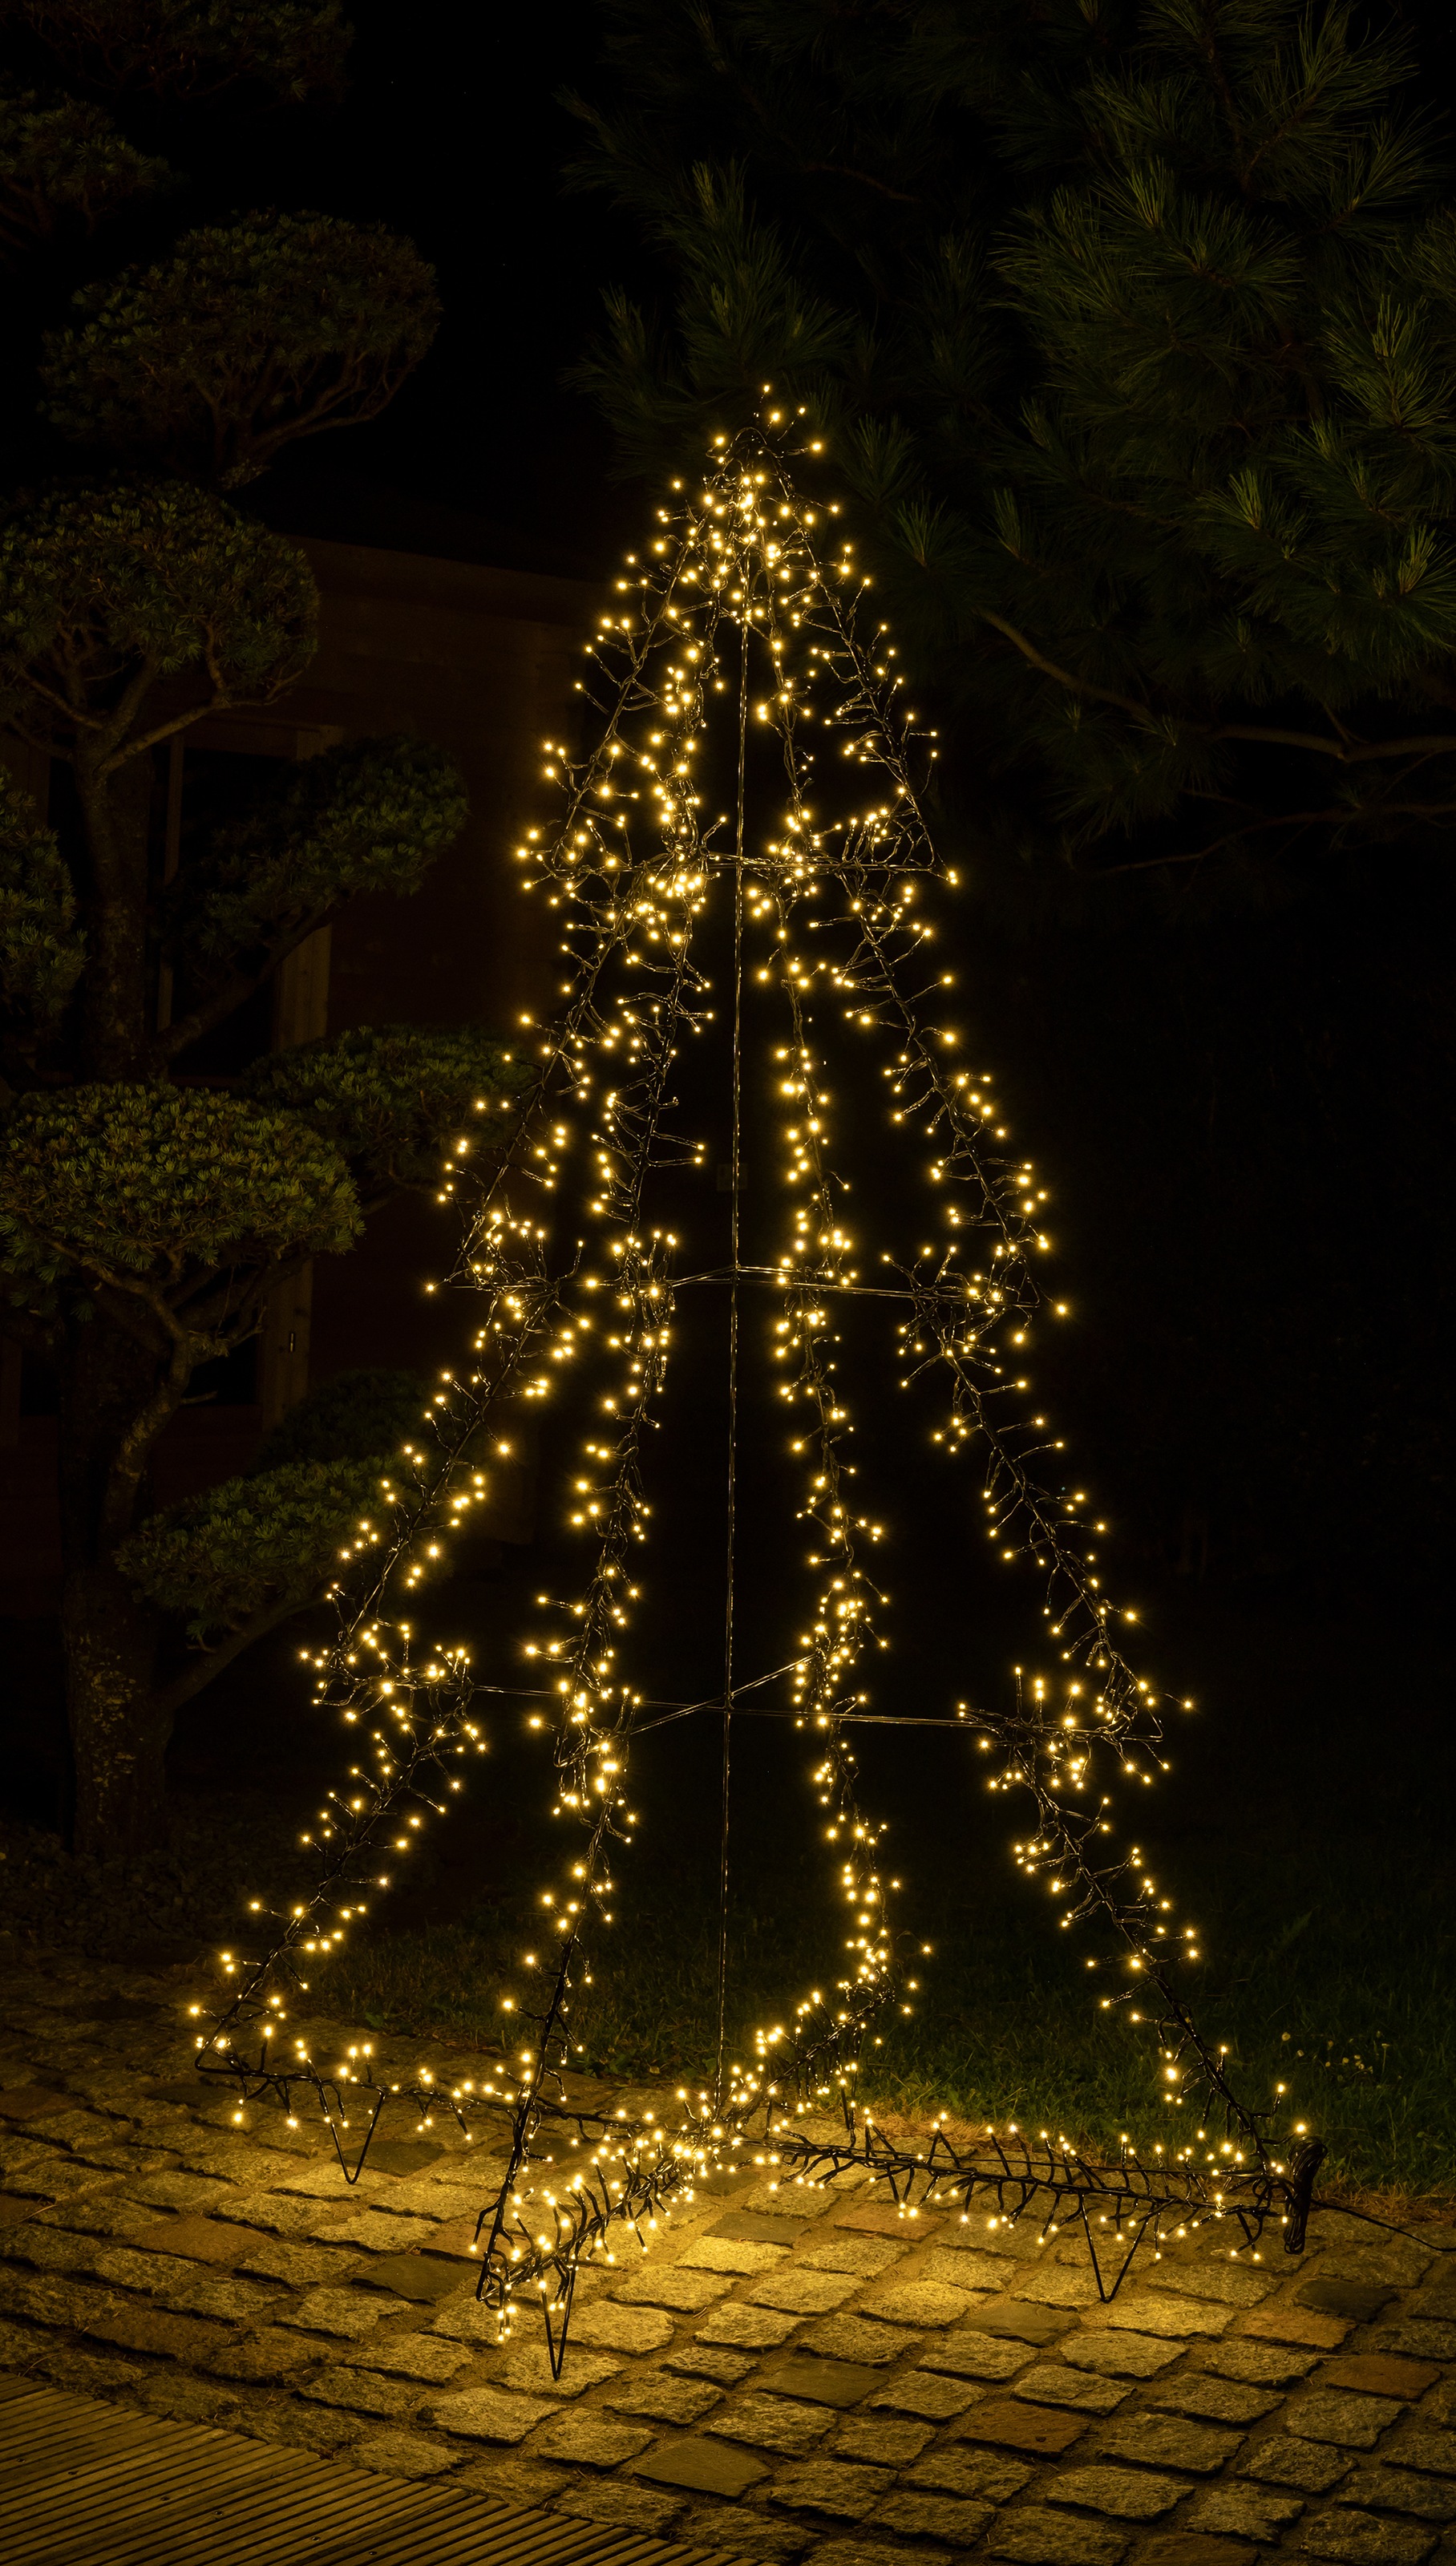 FAIRYBELL LED-Tannenbaum 200 cm, 300 warmweiße LED